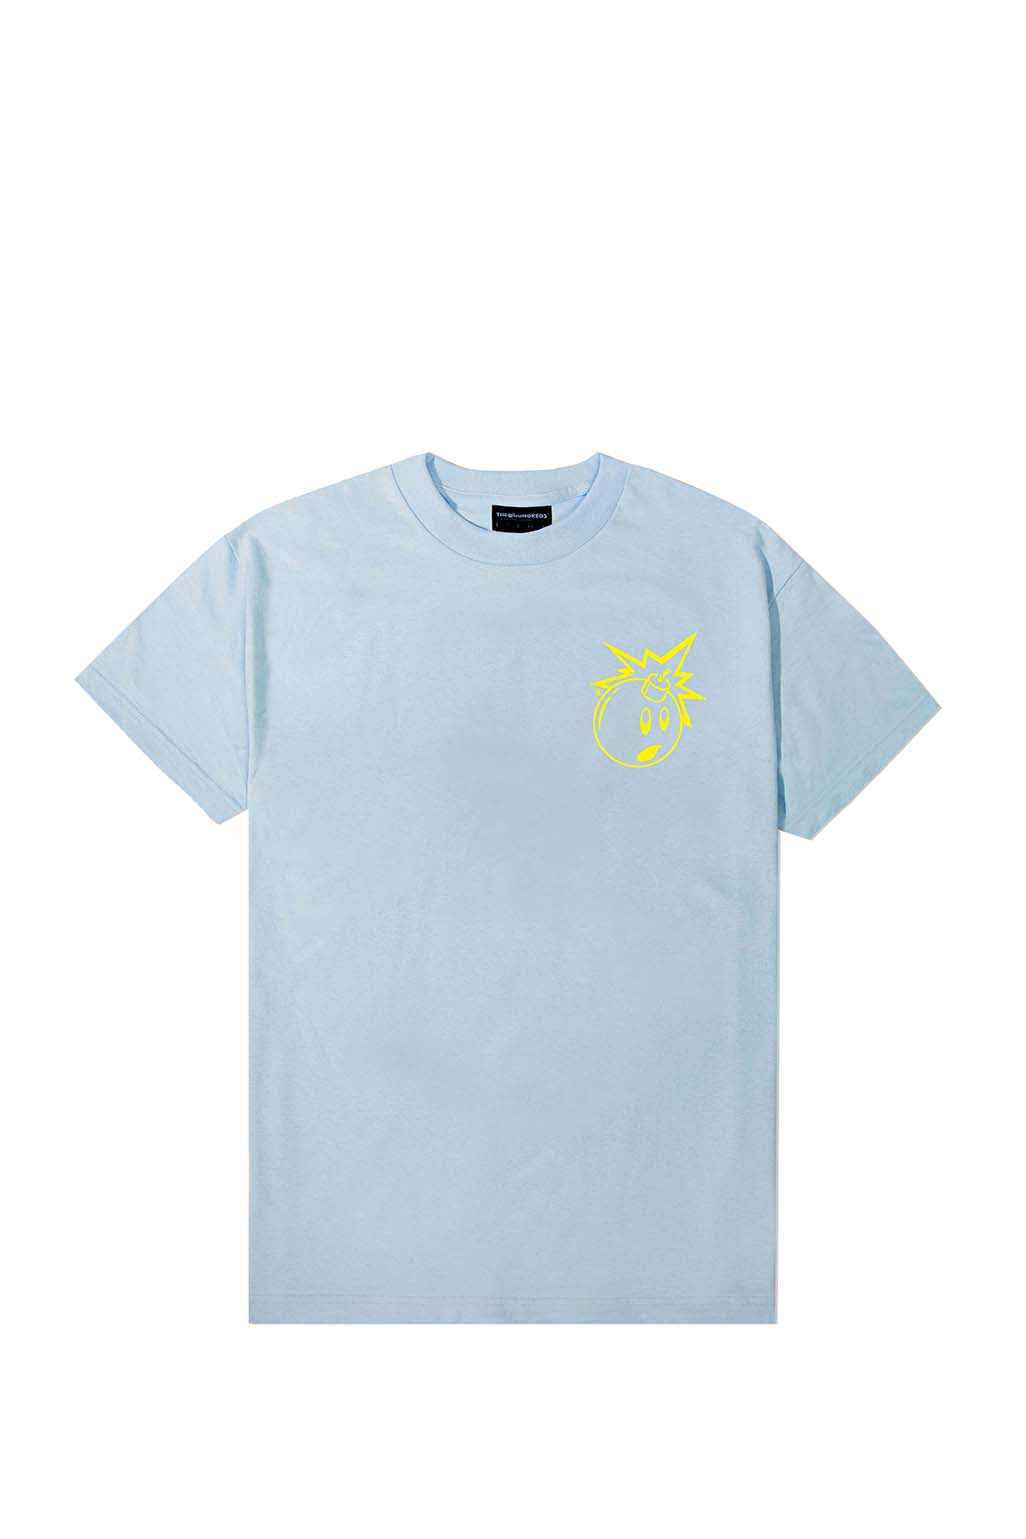 Image of Simple Adam T-Shirt